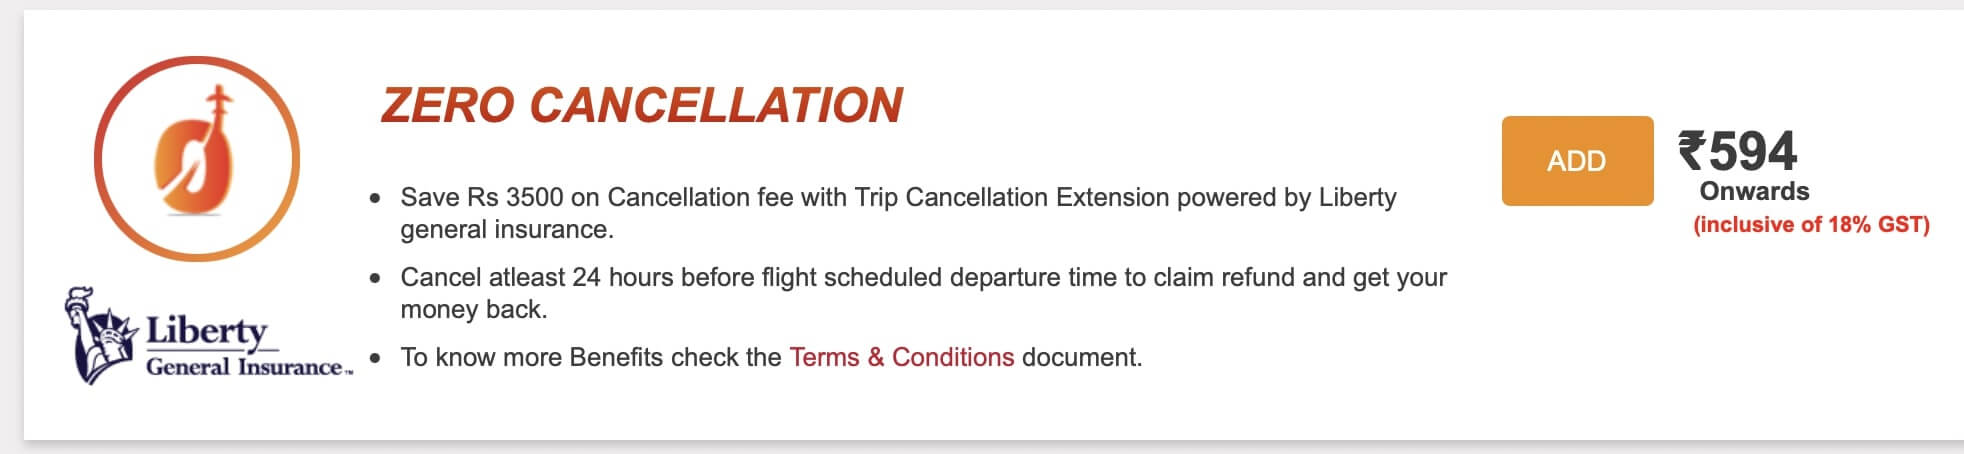 SpiceJet Zero Cancellation Add-on